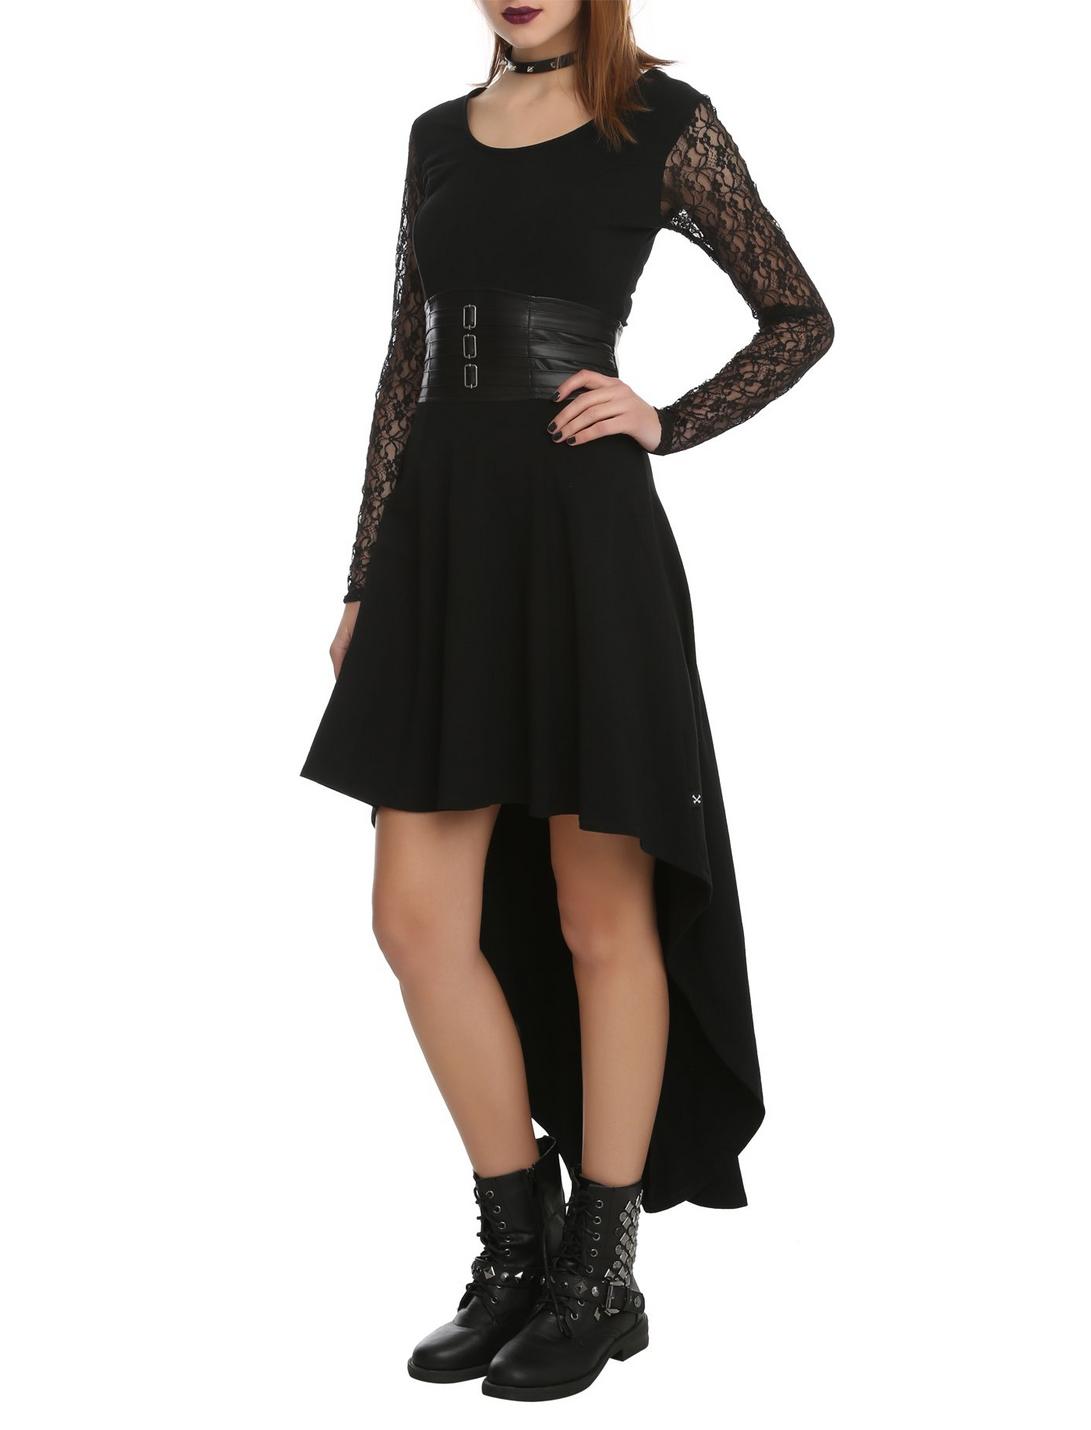 Royal Bones By Tripp Black Lace Sleeve Salem Dress, BLACK, hi-res